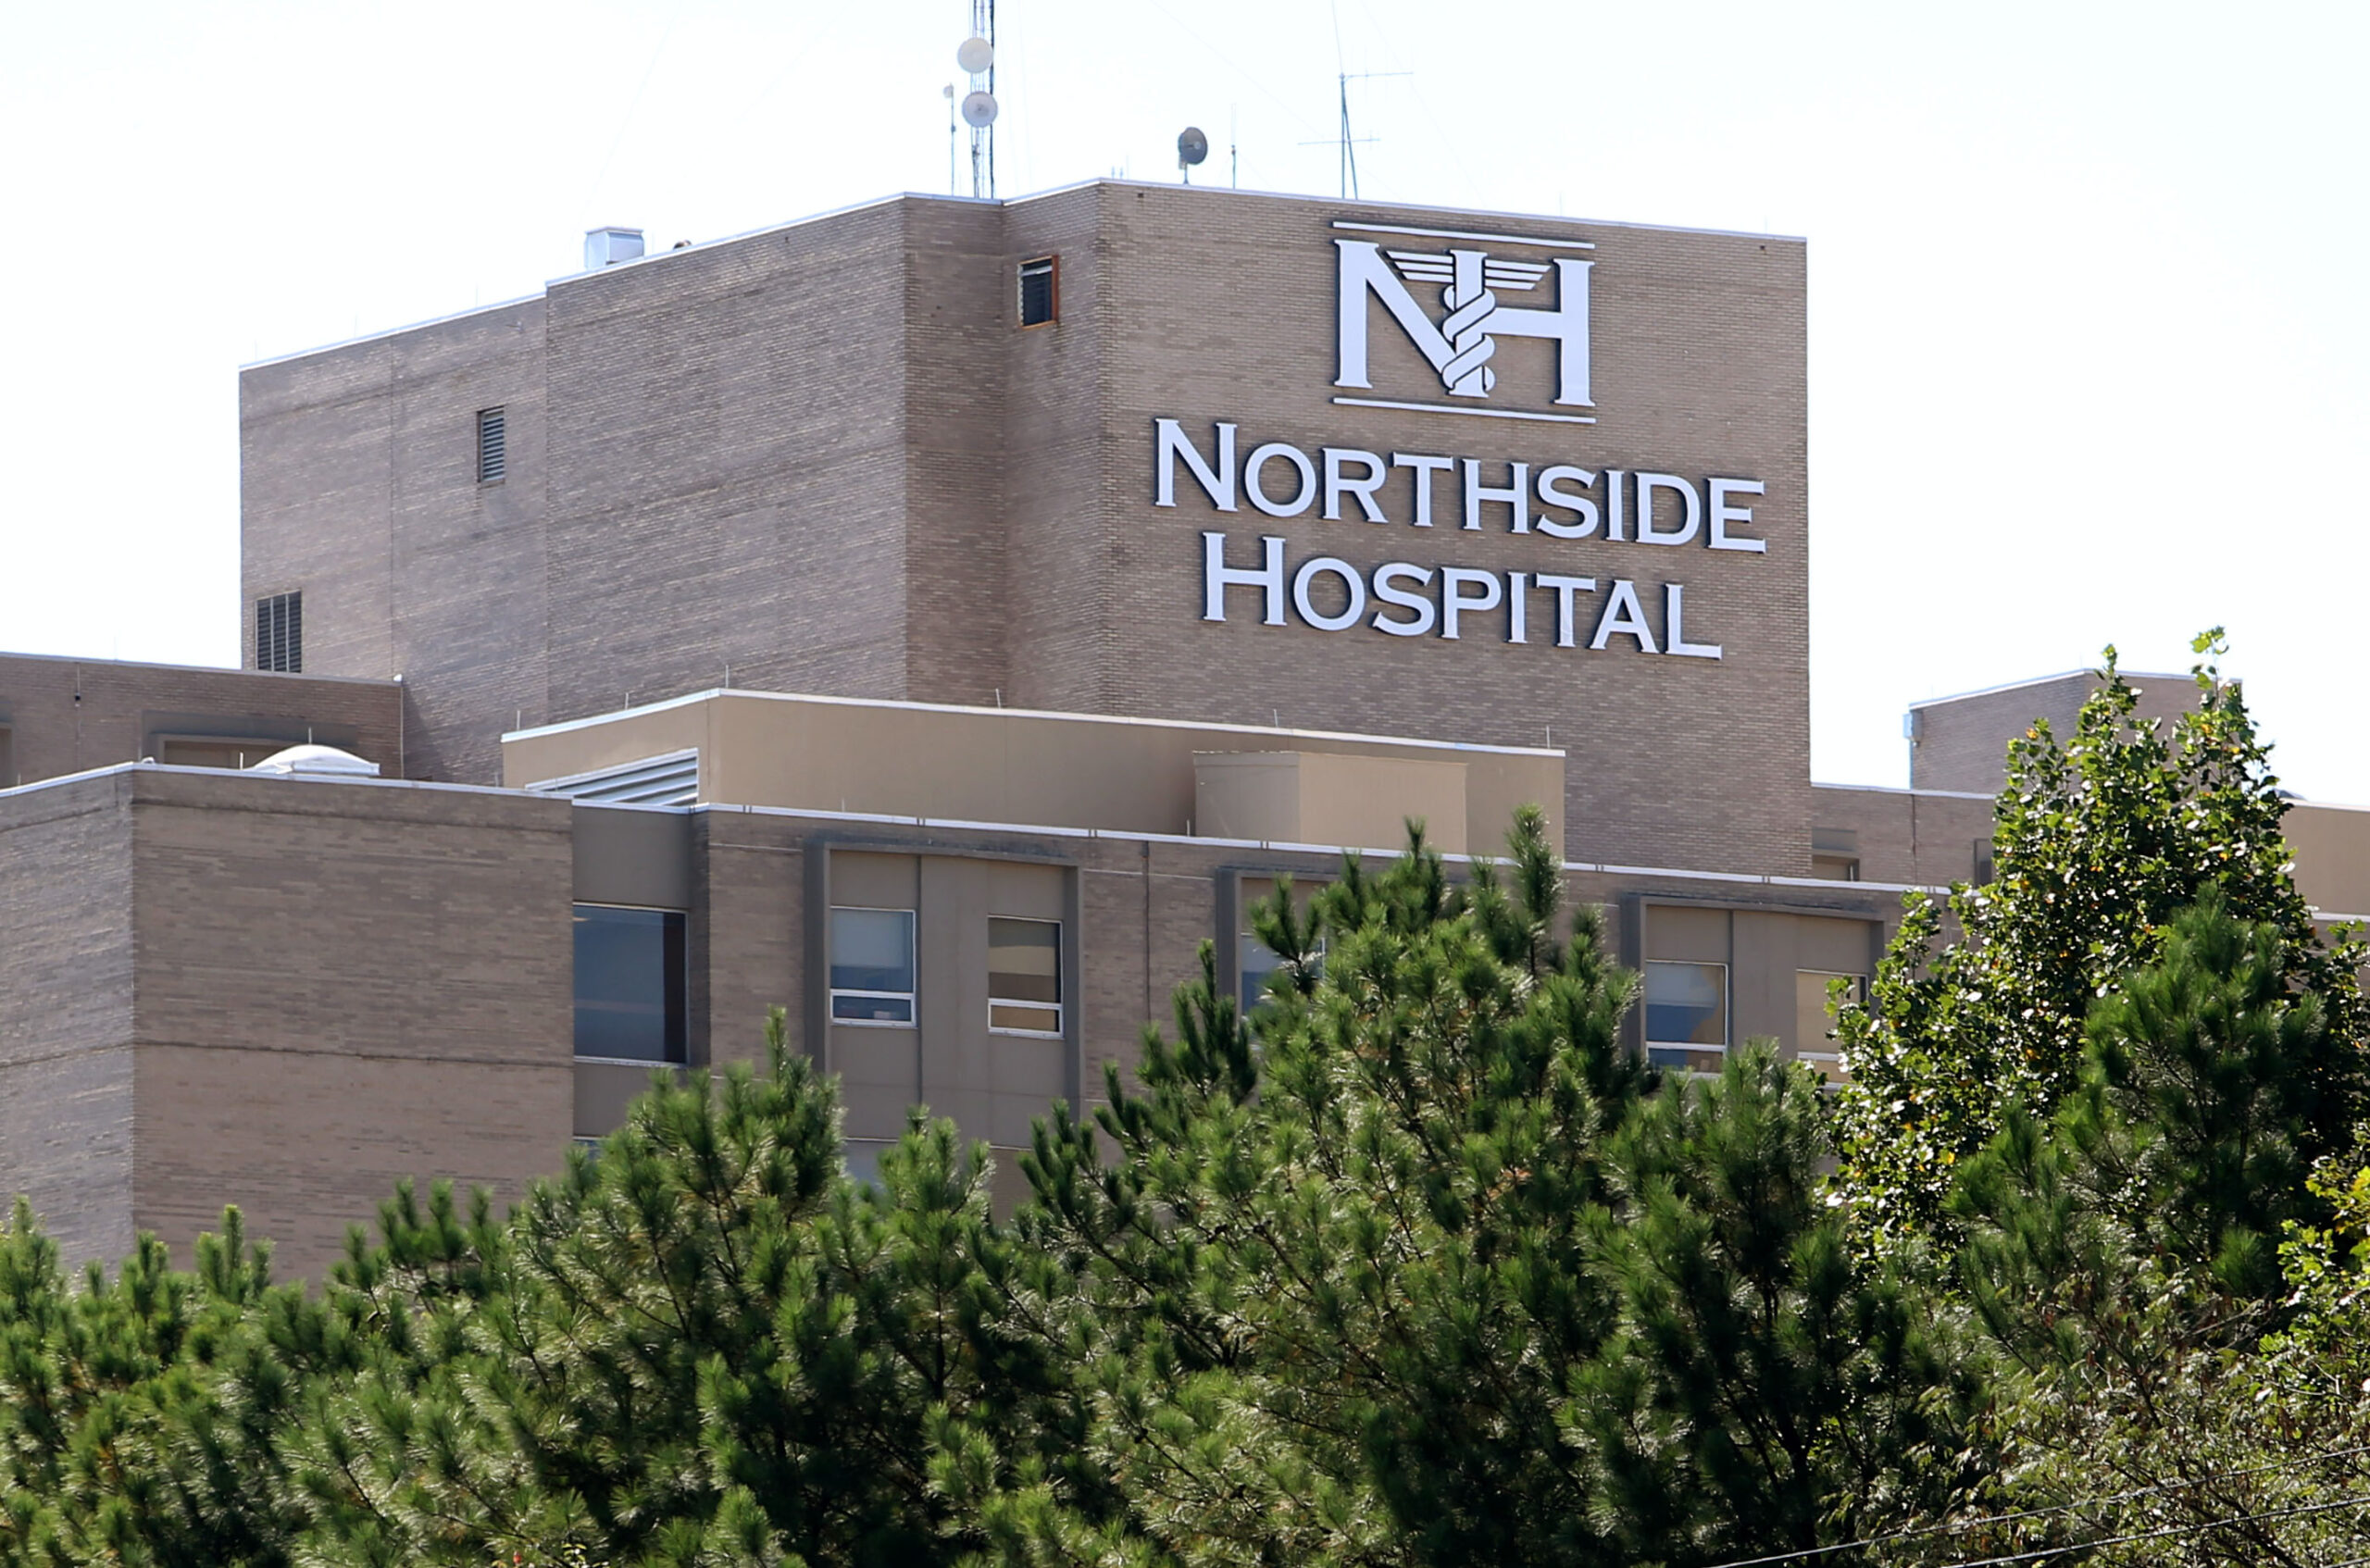 Northside Hospital Mall Lockdown, Atlanta, GA, Security Threat prompts lockdown